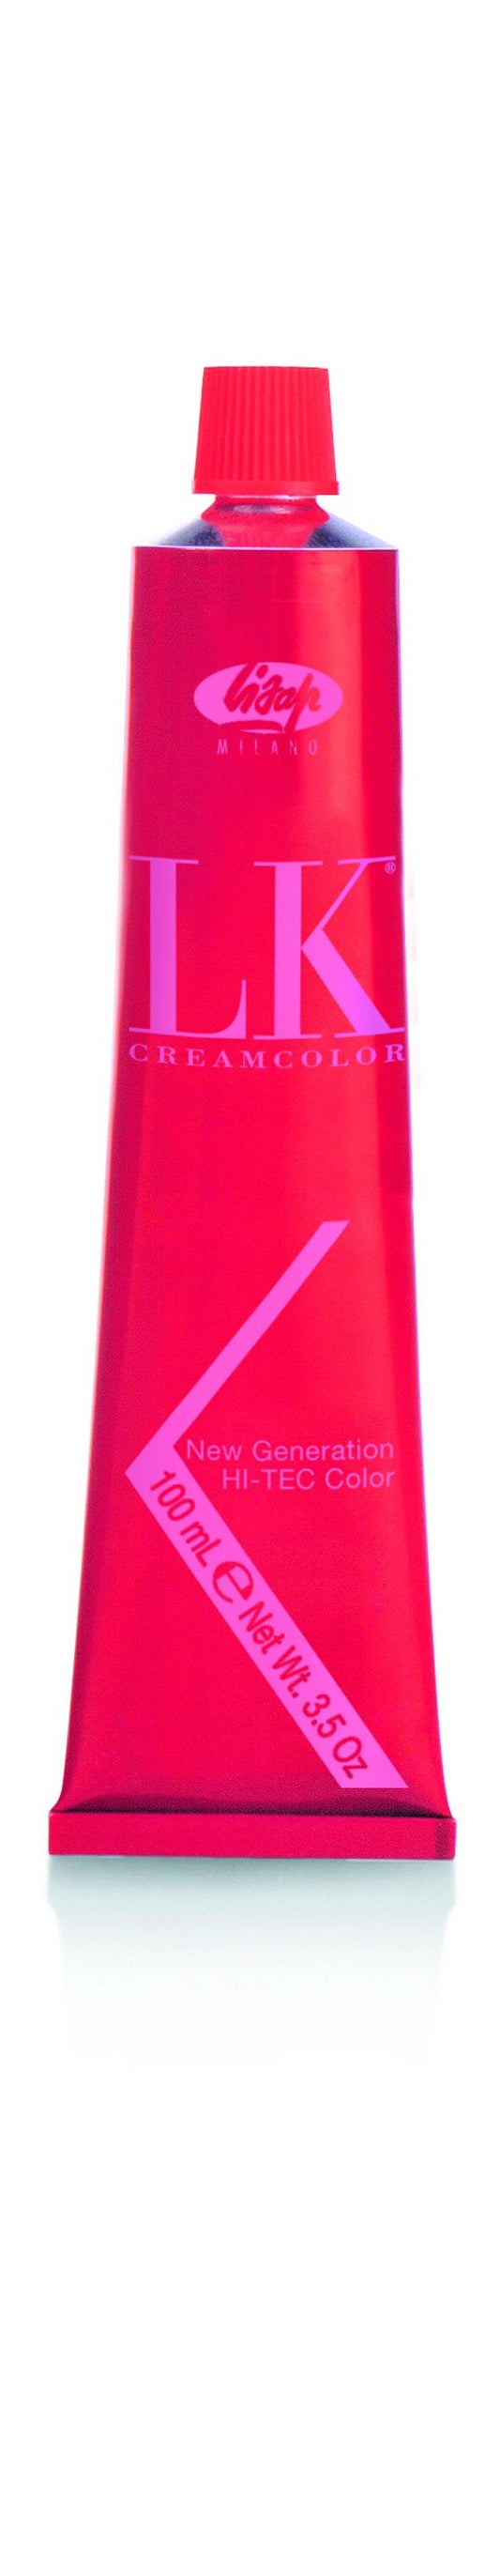 LK Creamcolor Hi-Red Mixtone 00/666